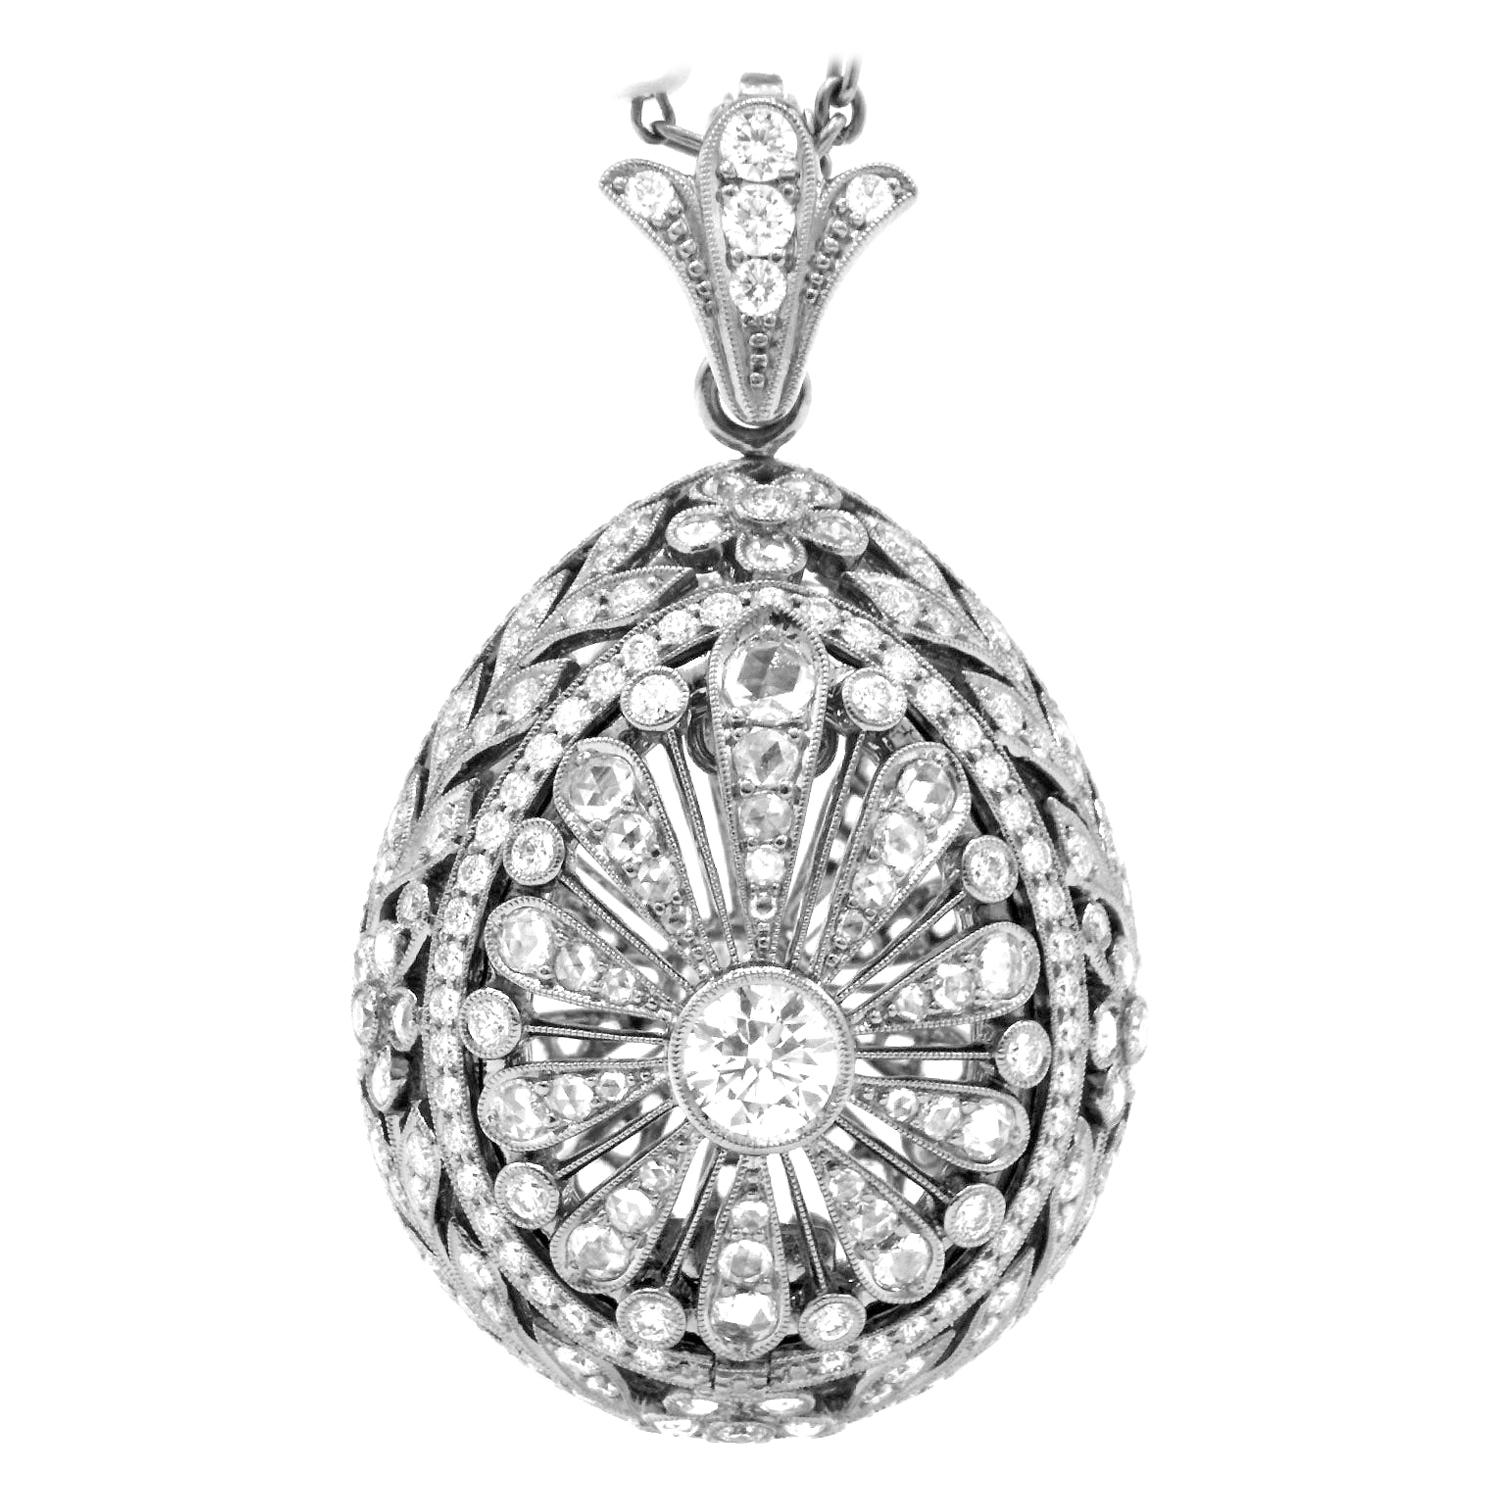 Edwardian Diamond Open Egg Pendant Locket Necklace, Chavana Collection For Sale